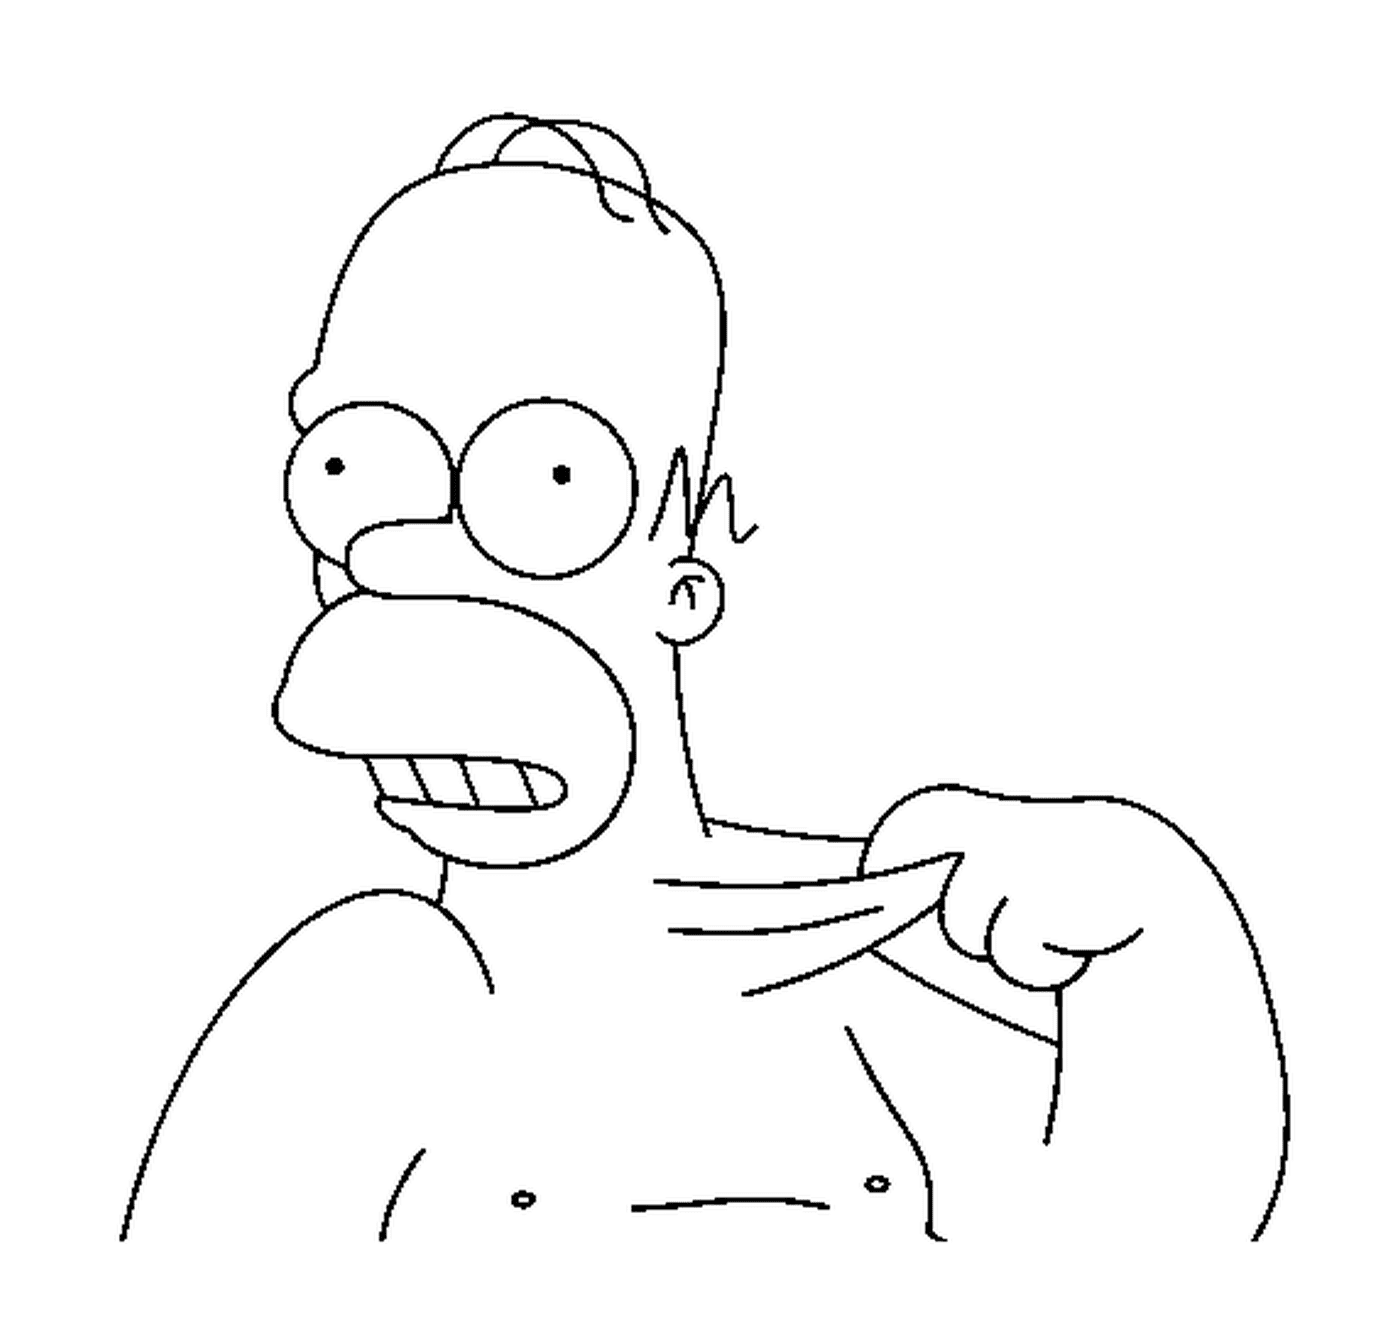  Homer Simpson with elastic skin 